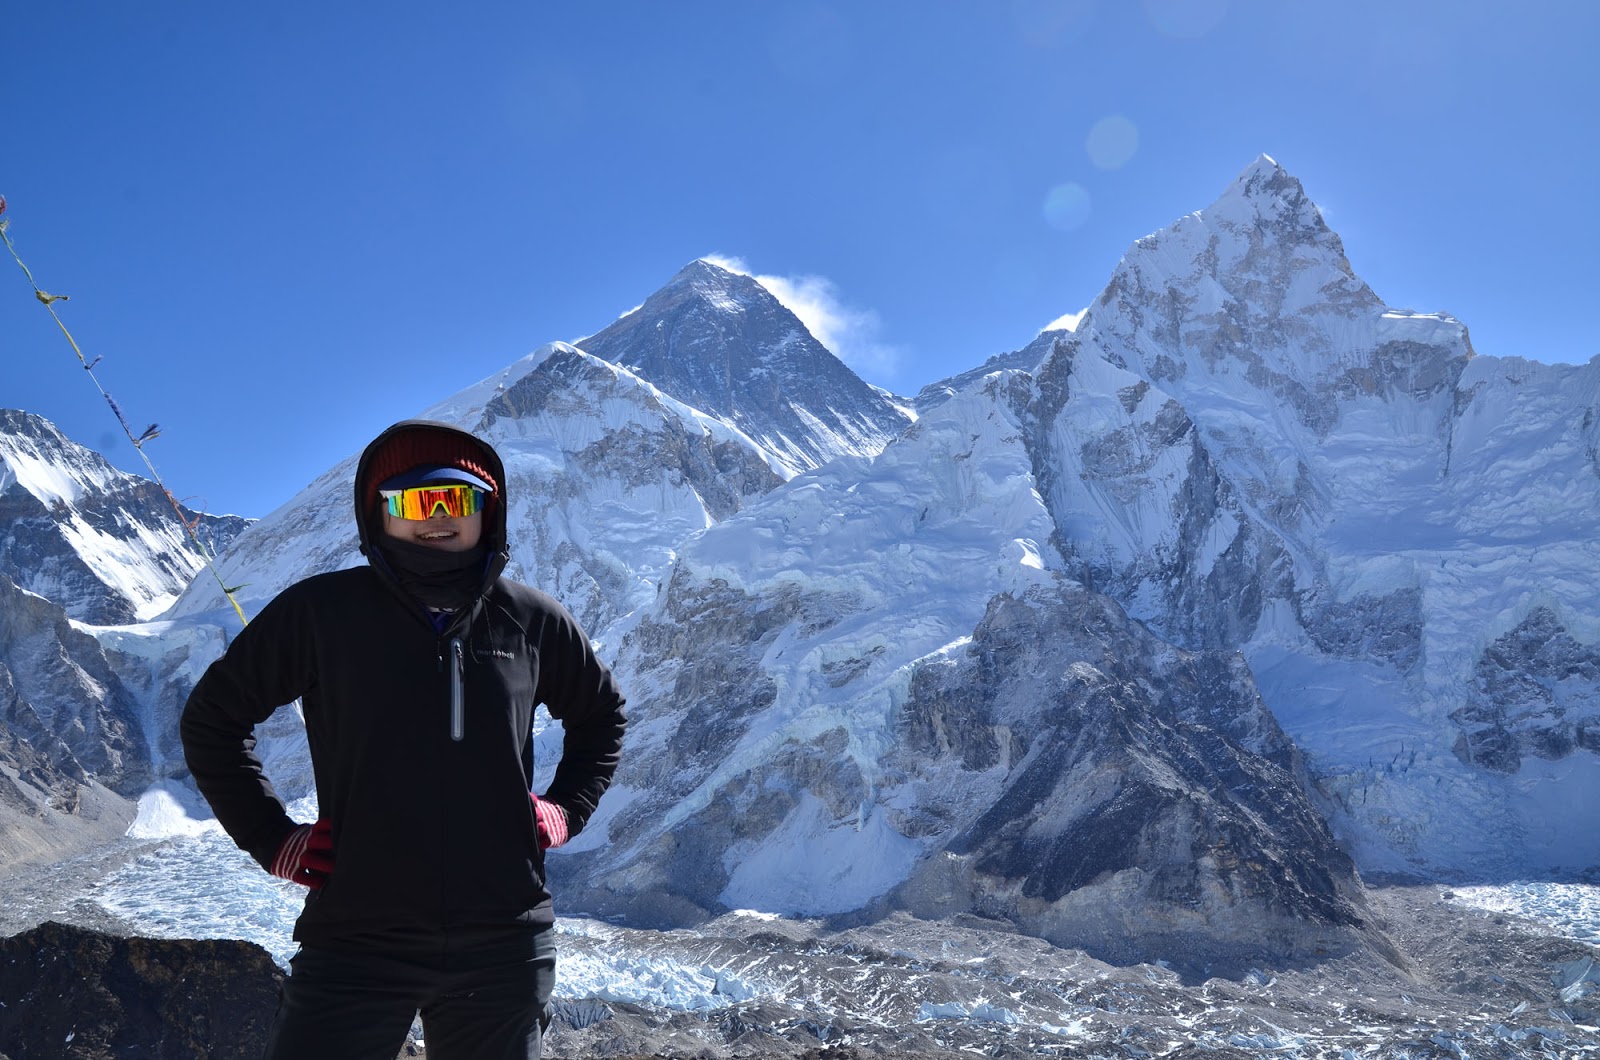 Magic Expedition Trekking And Tours, Trekking in Nepal: Top 5 Nepal